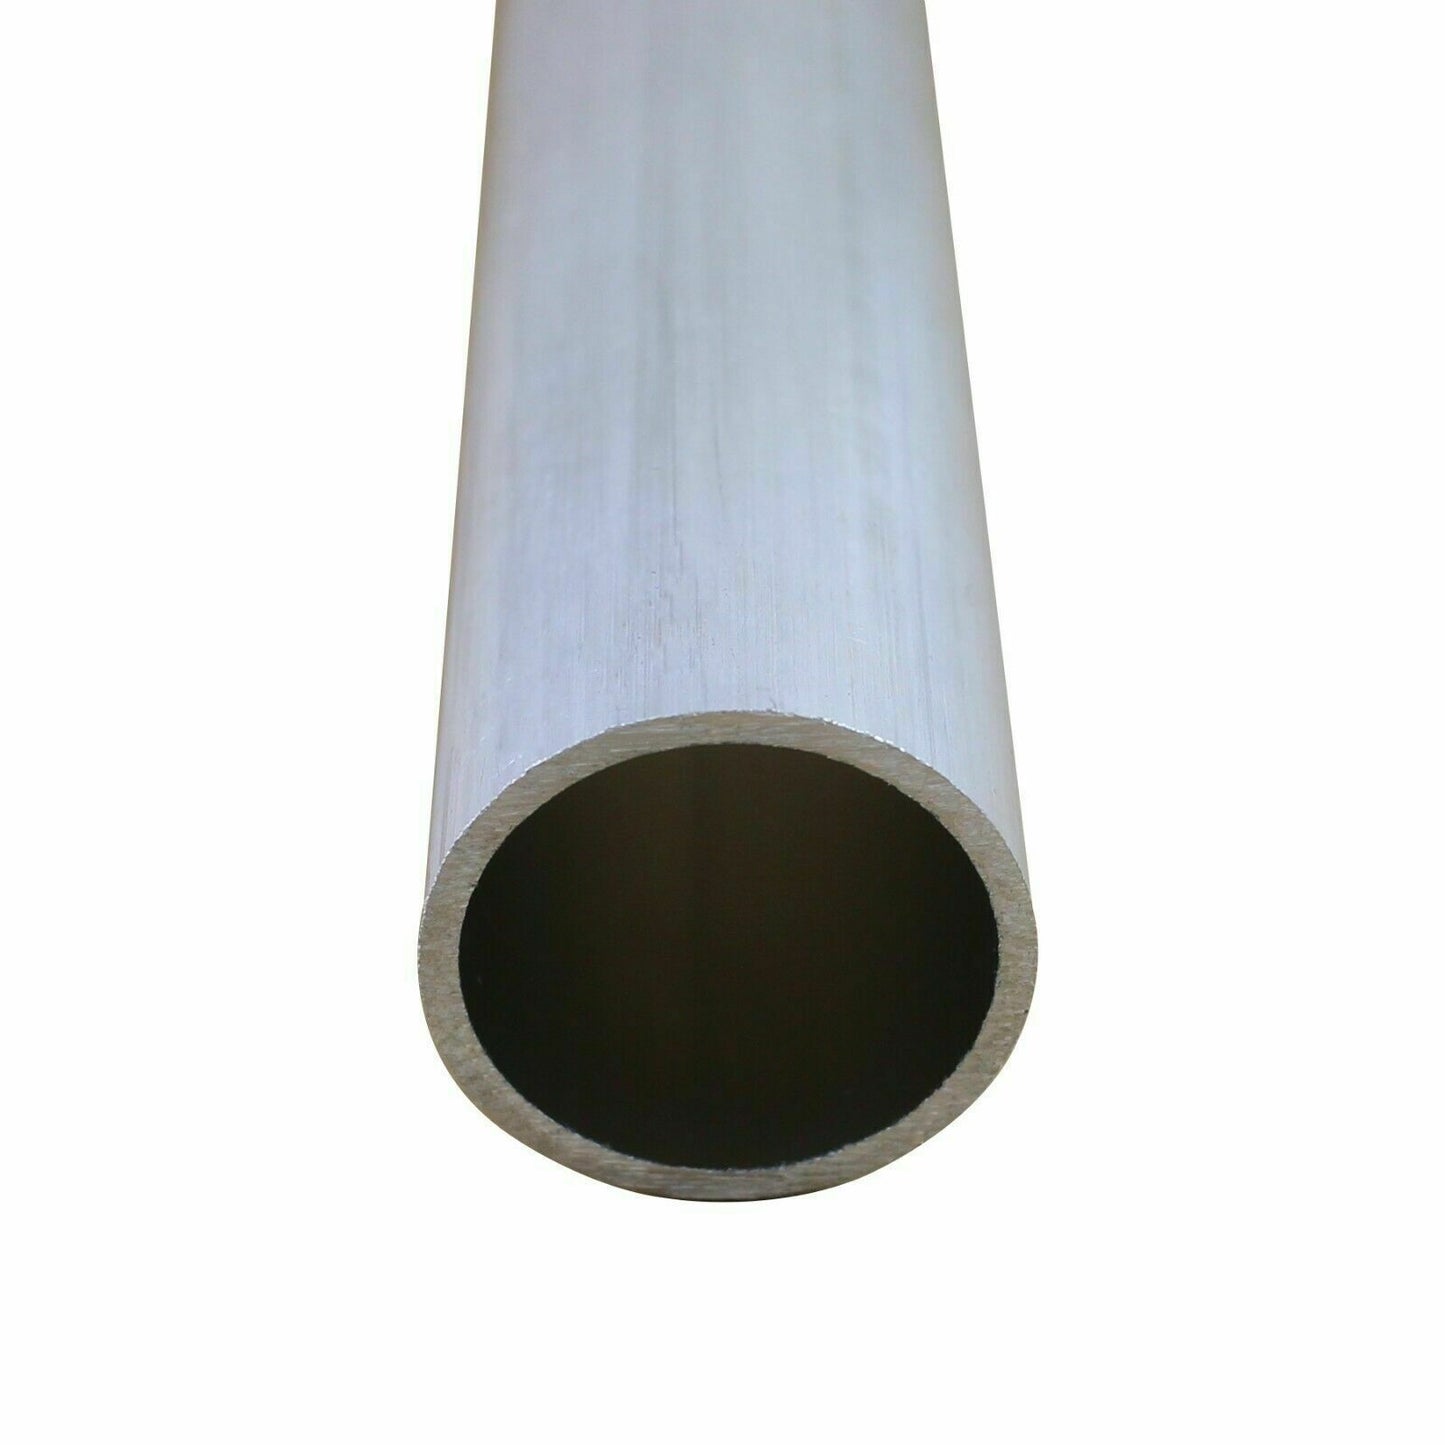 OD 40 mm ID 34 mm 1 Pcs Aluminum Round Tube Pipe